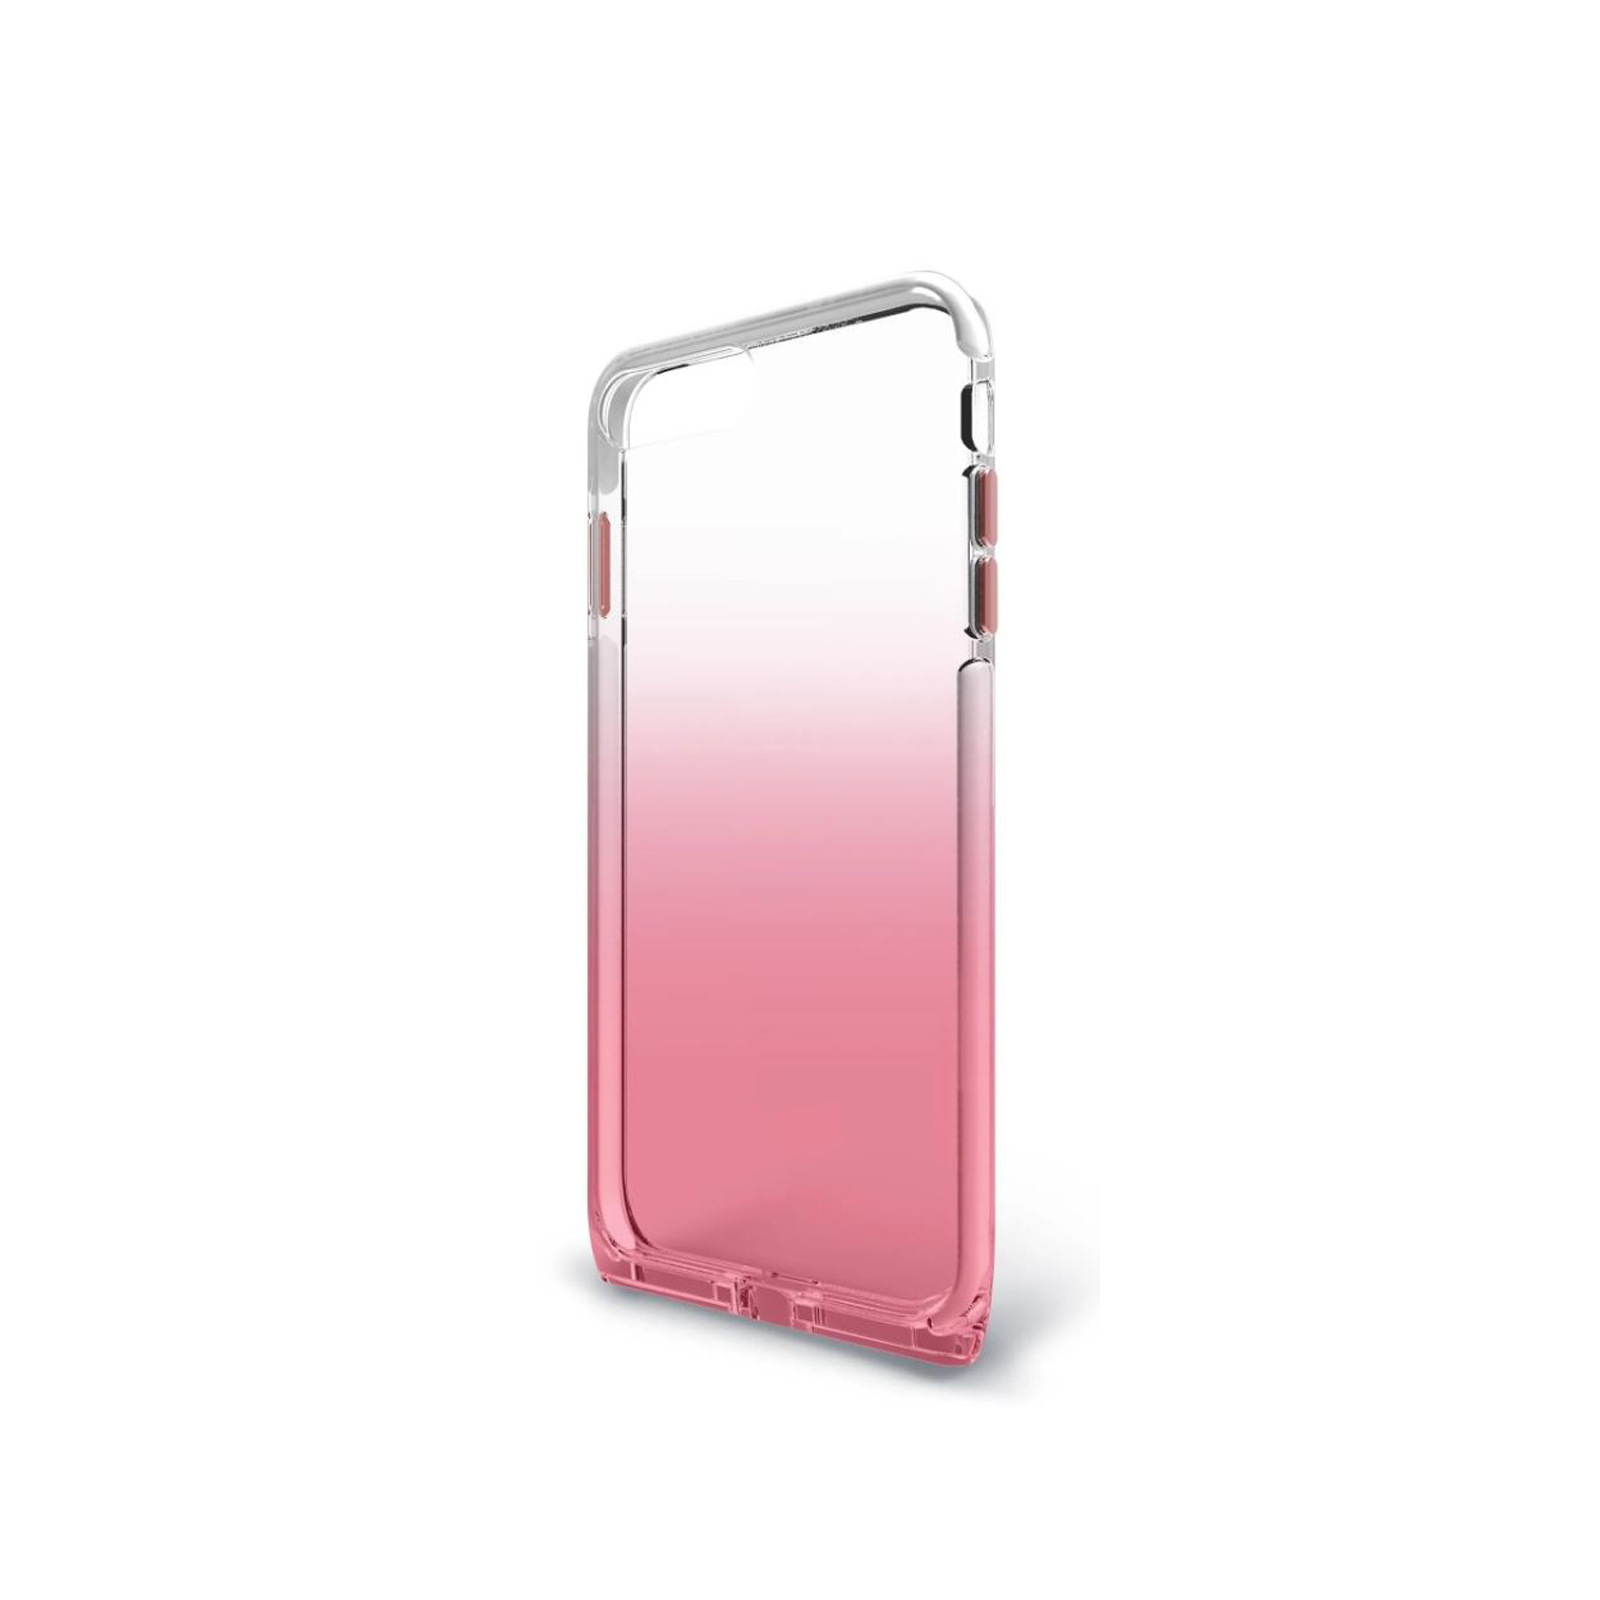 Harmony iPhone 6 Plus / 7 Plus / 8 Plus Clear / Rose Case Brand New